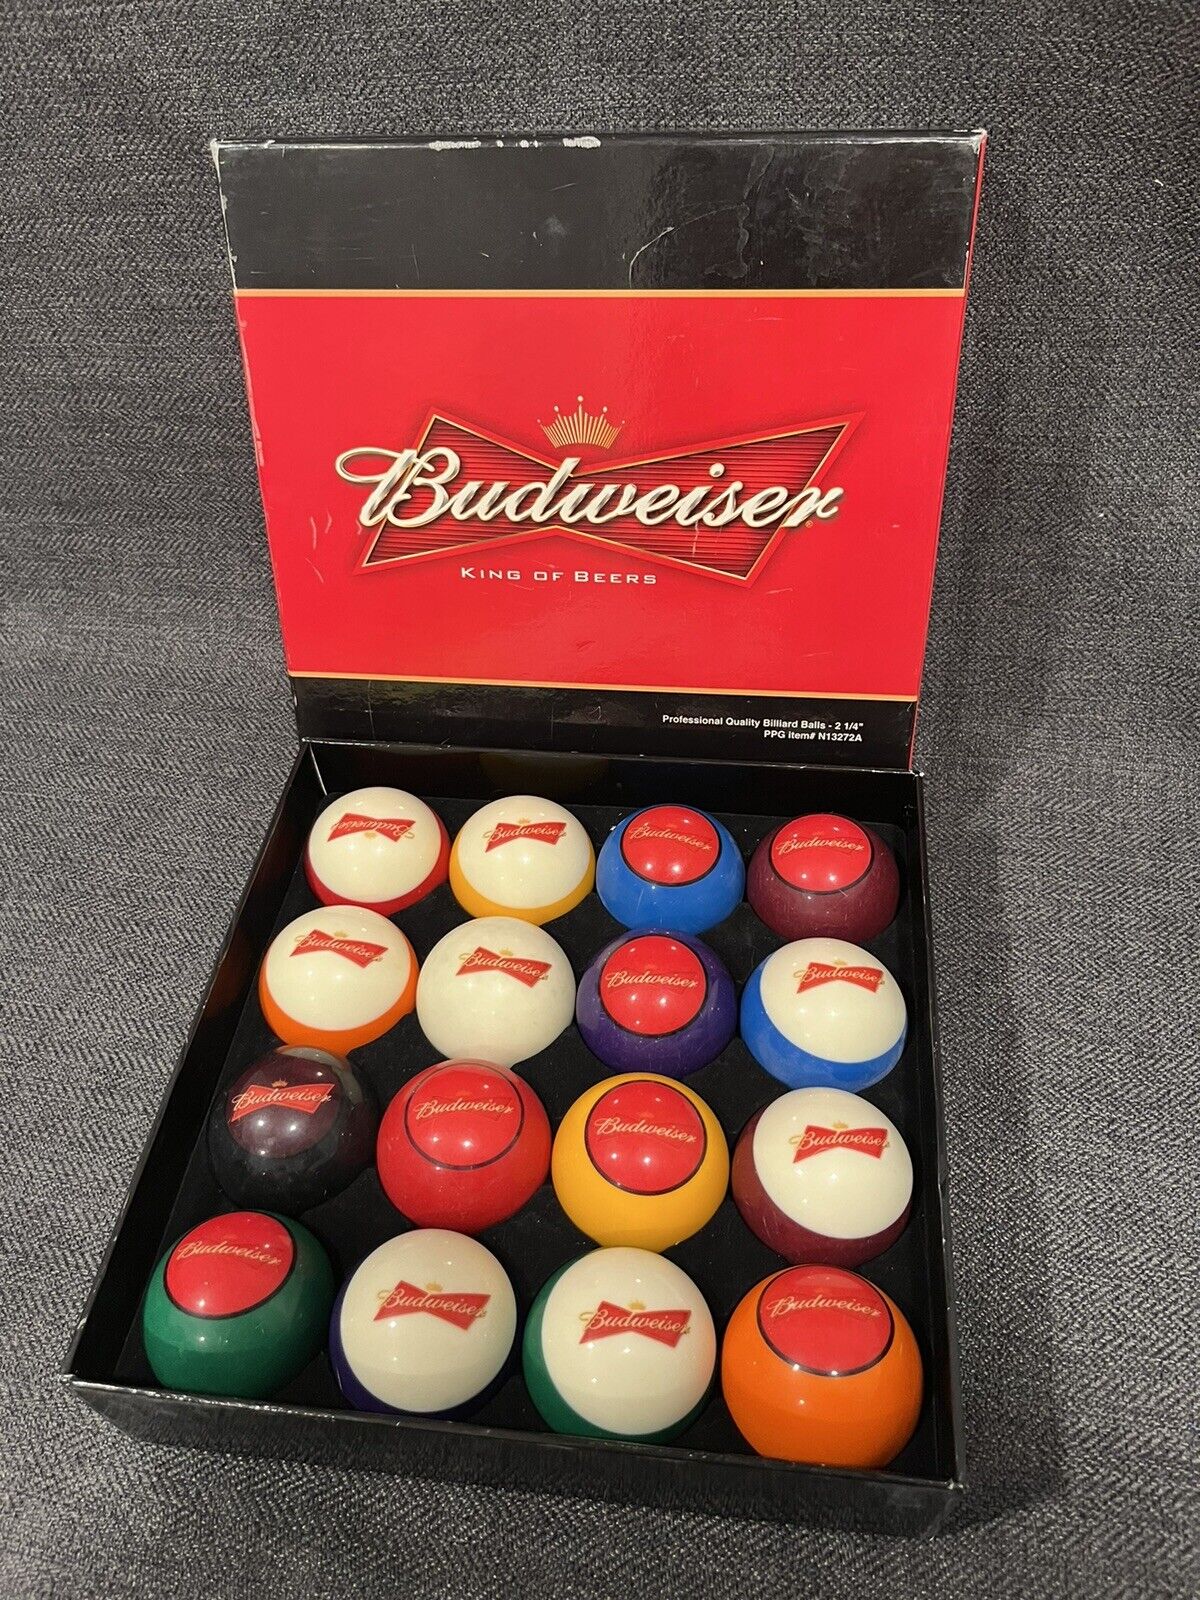 Vintage Budweiser Beer Pool Billiard Ball Set, Complete, Full Size